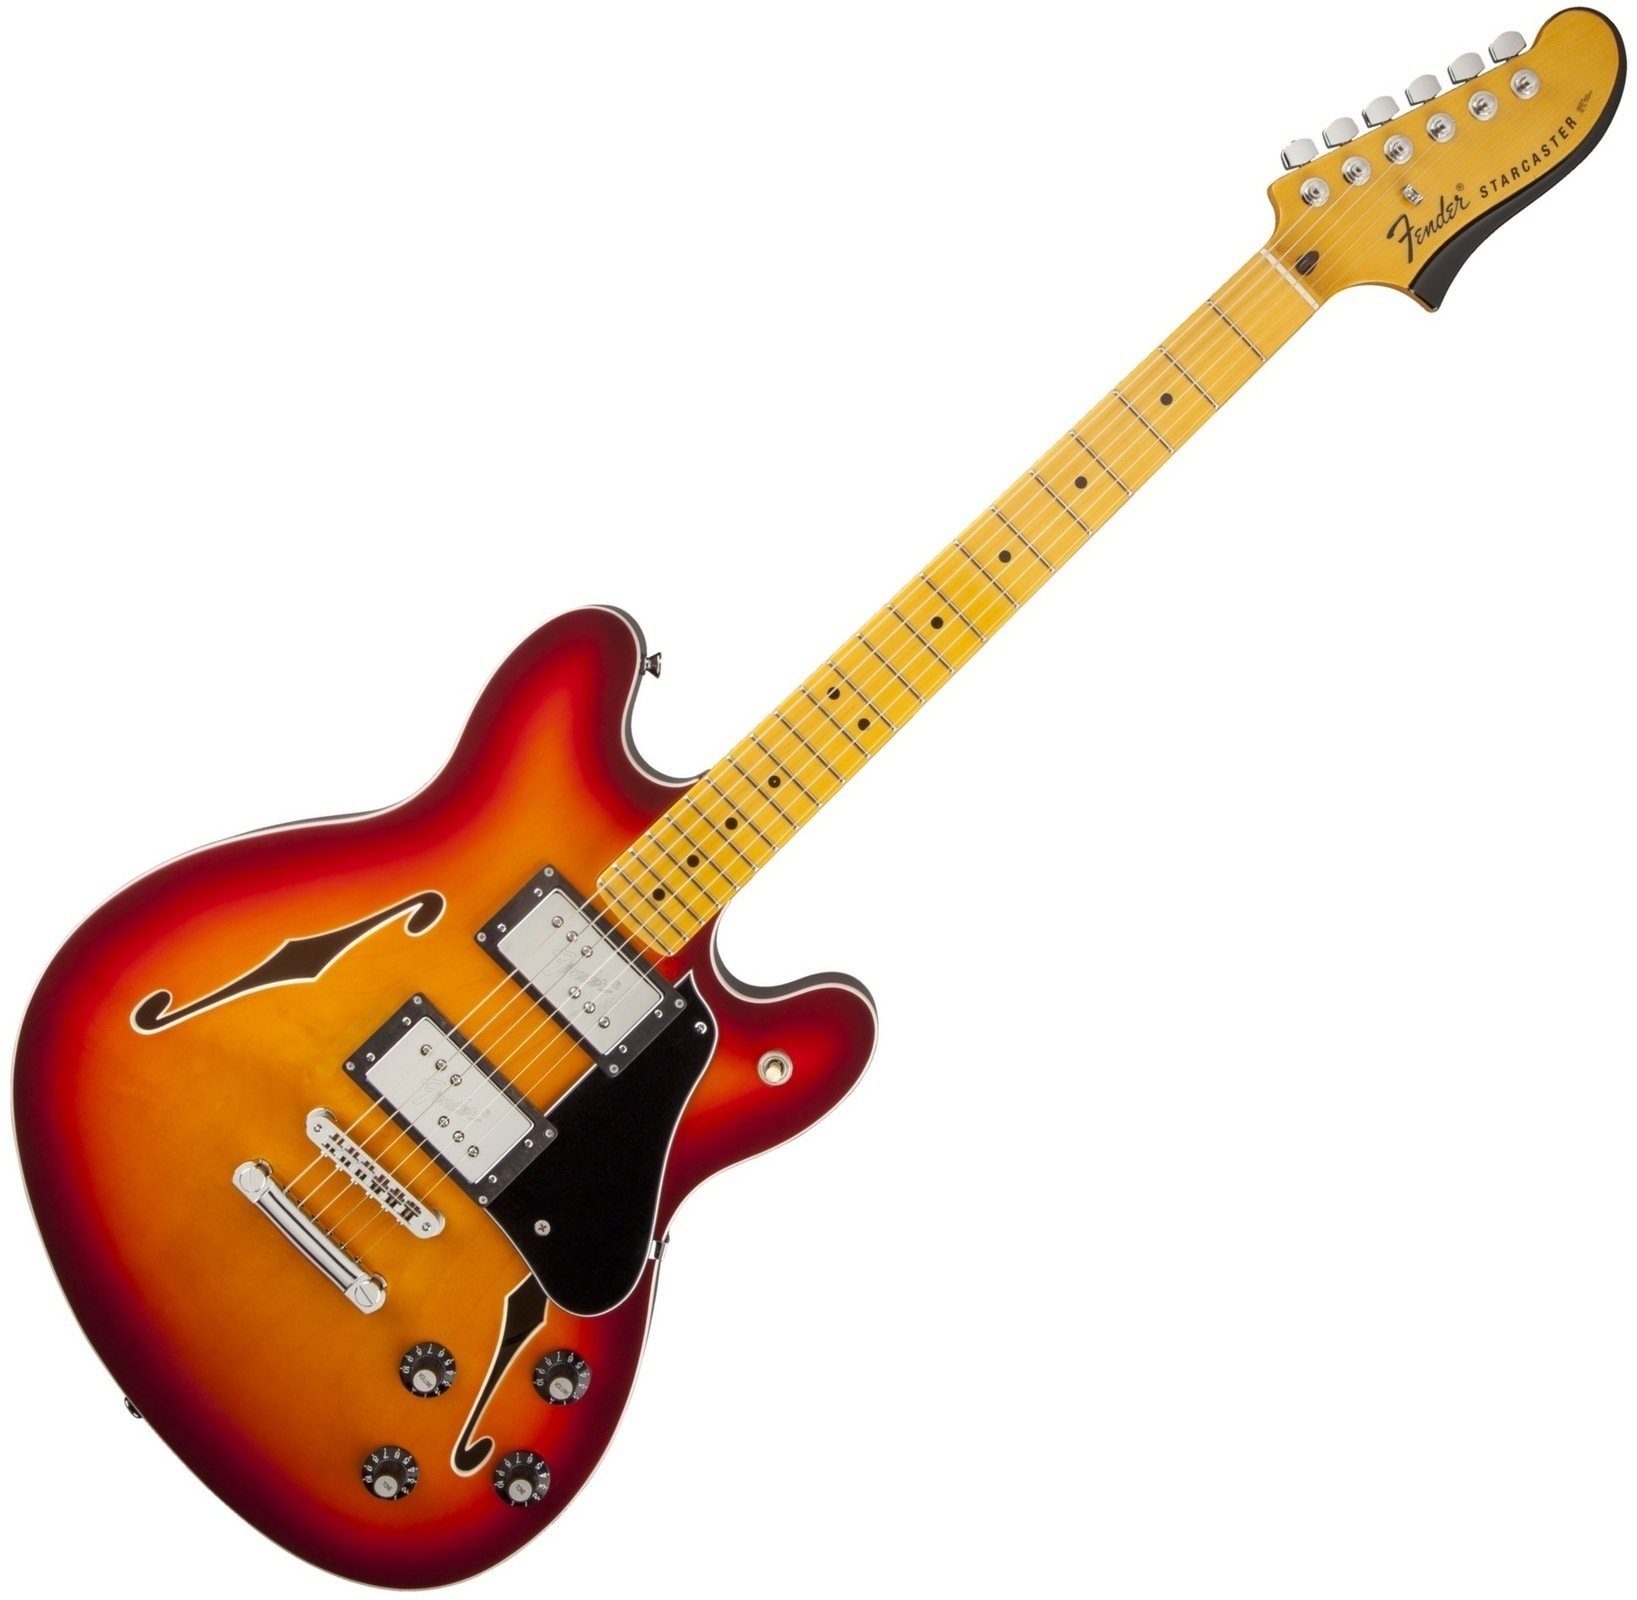 Джаз китара Fender Starcaster, Maple Fingerboard, Aged Cherry Burst